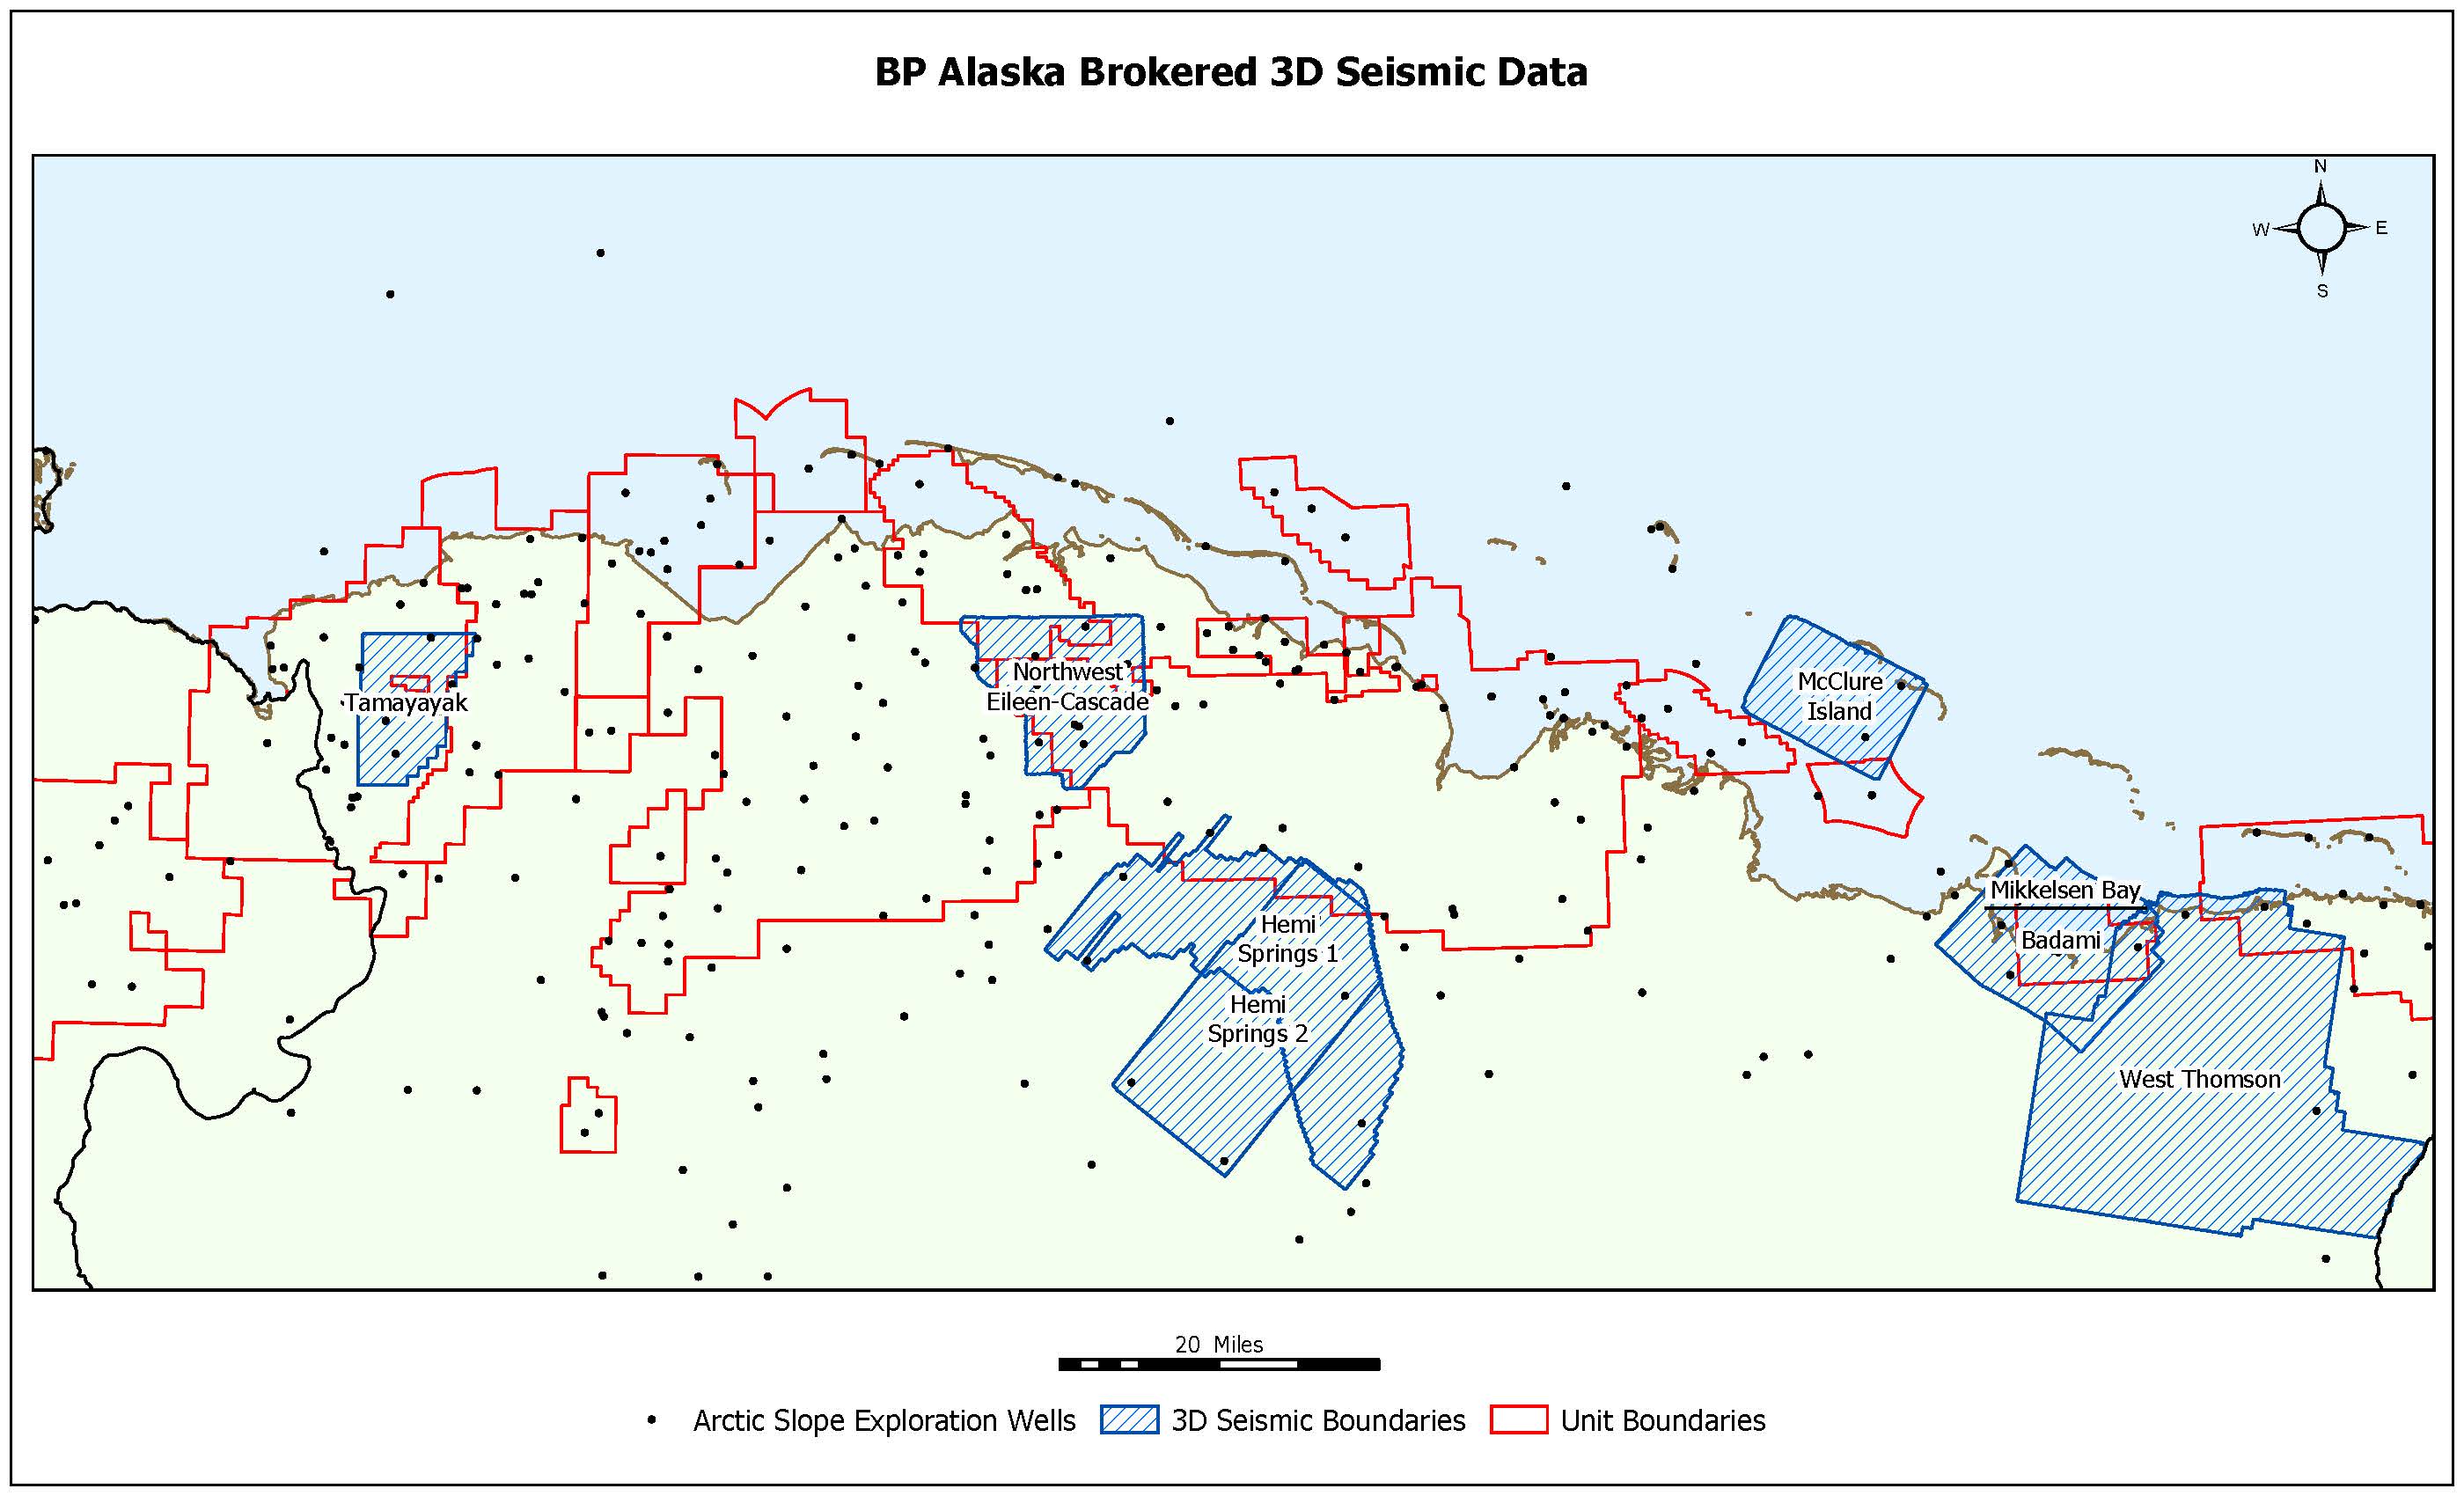 Alaska brokered 3D seismic data